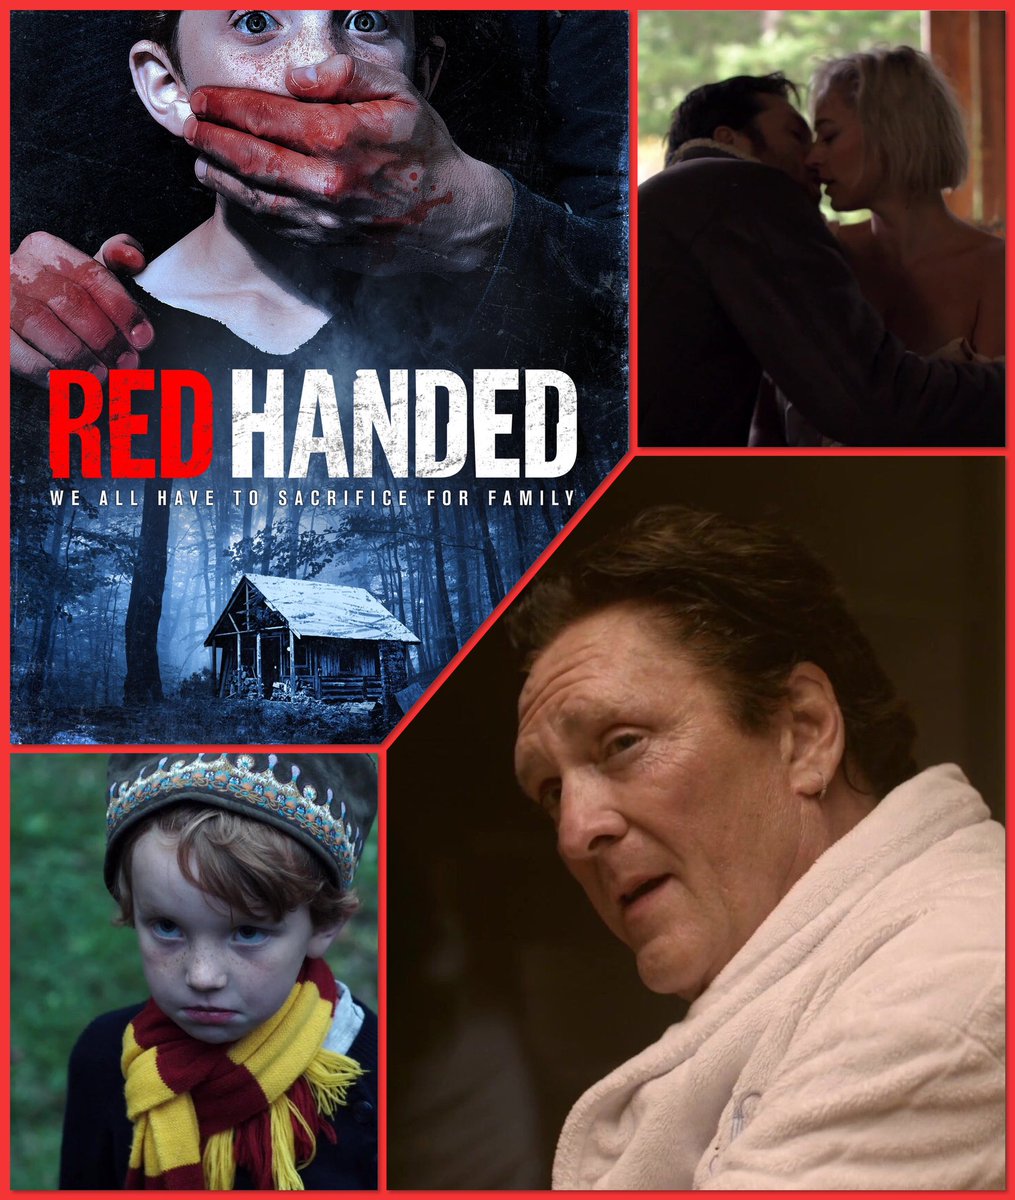 Red Handed - poster 03
Keywords: media_poster;red_handed_media